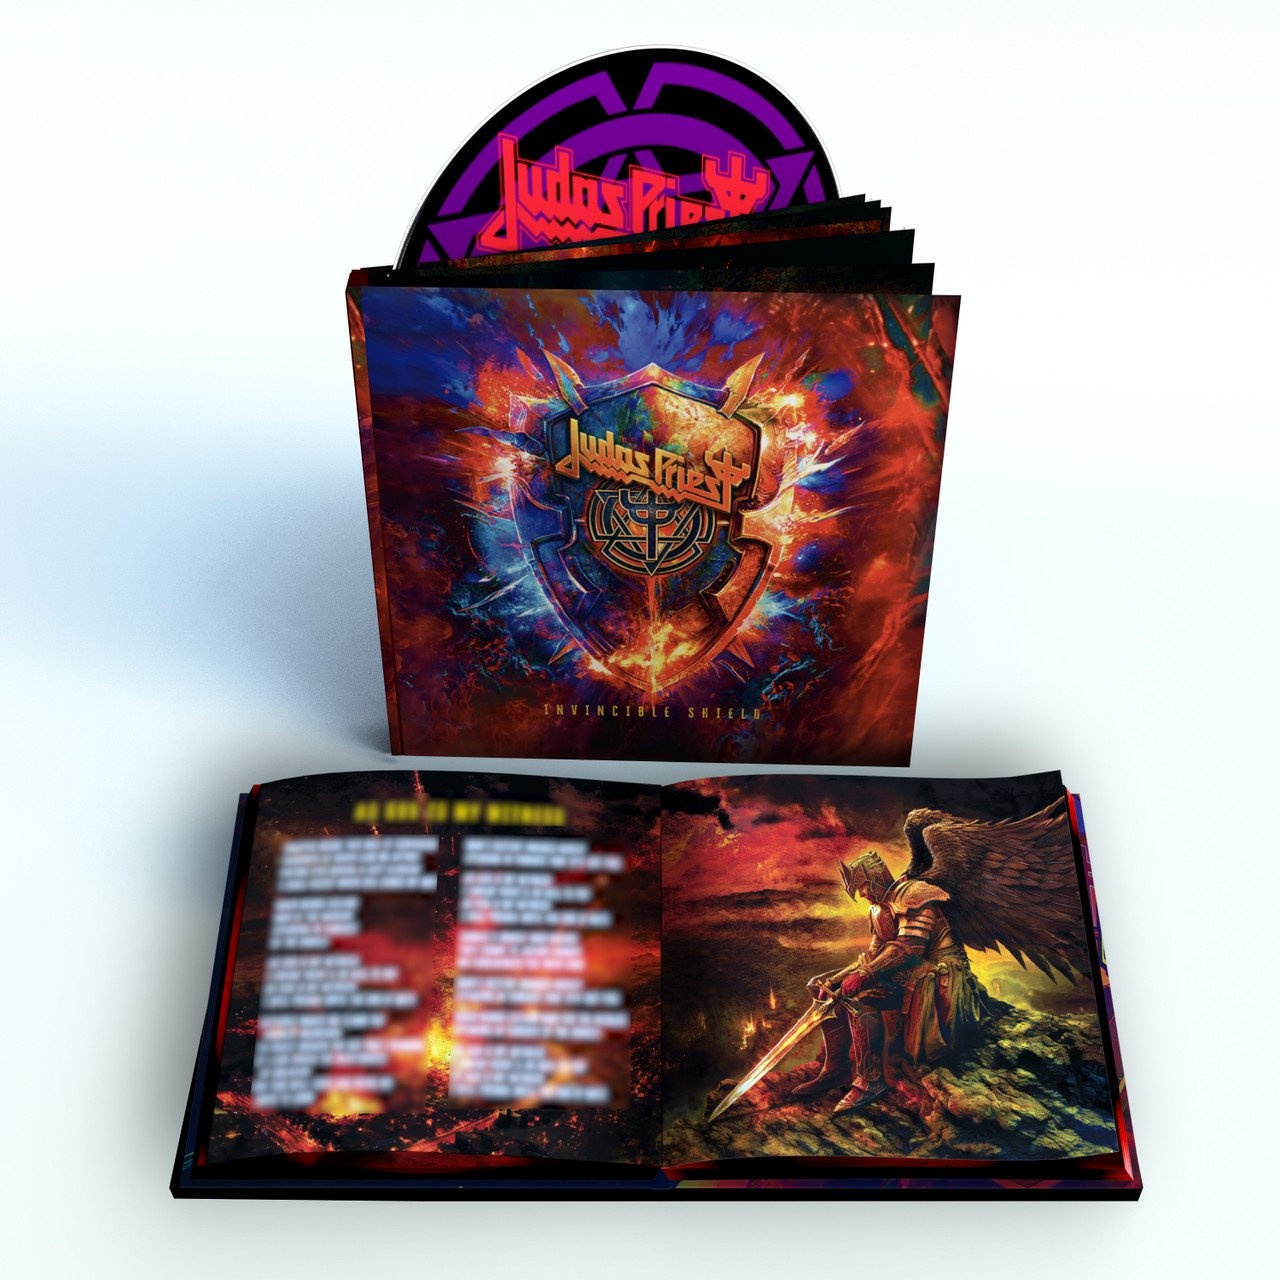 Judas priest invincible shield mp3. Judas Priest - Invincible Shield (Deluxe Edition) (2024). Judas Priest - Invincible Shield (2024) CD. Judas Priest - 08.03.2024 - "Invincible Shield". Judas Priest Invisible Shield распаковка.